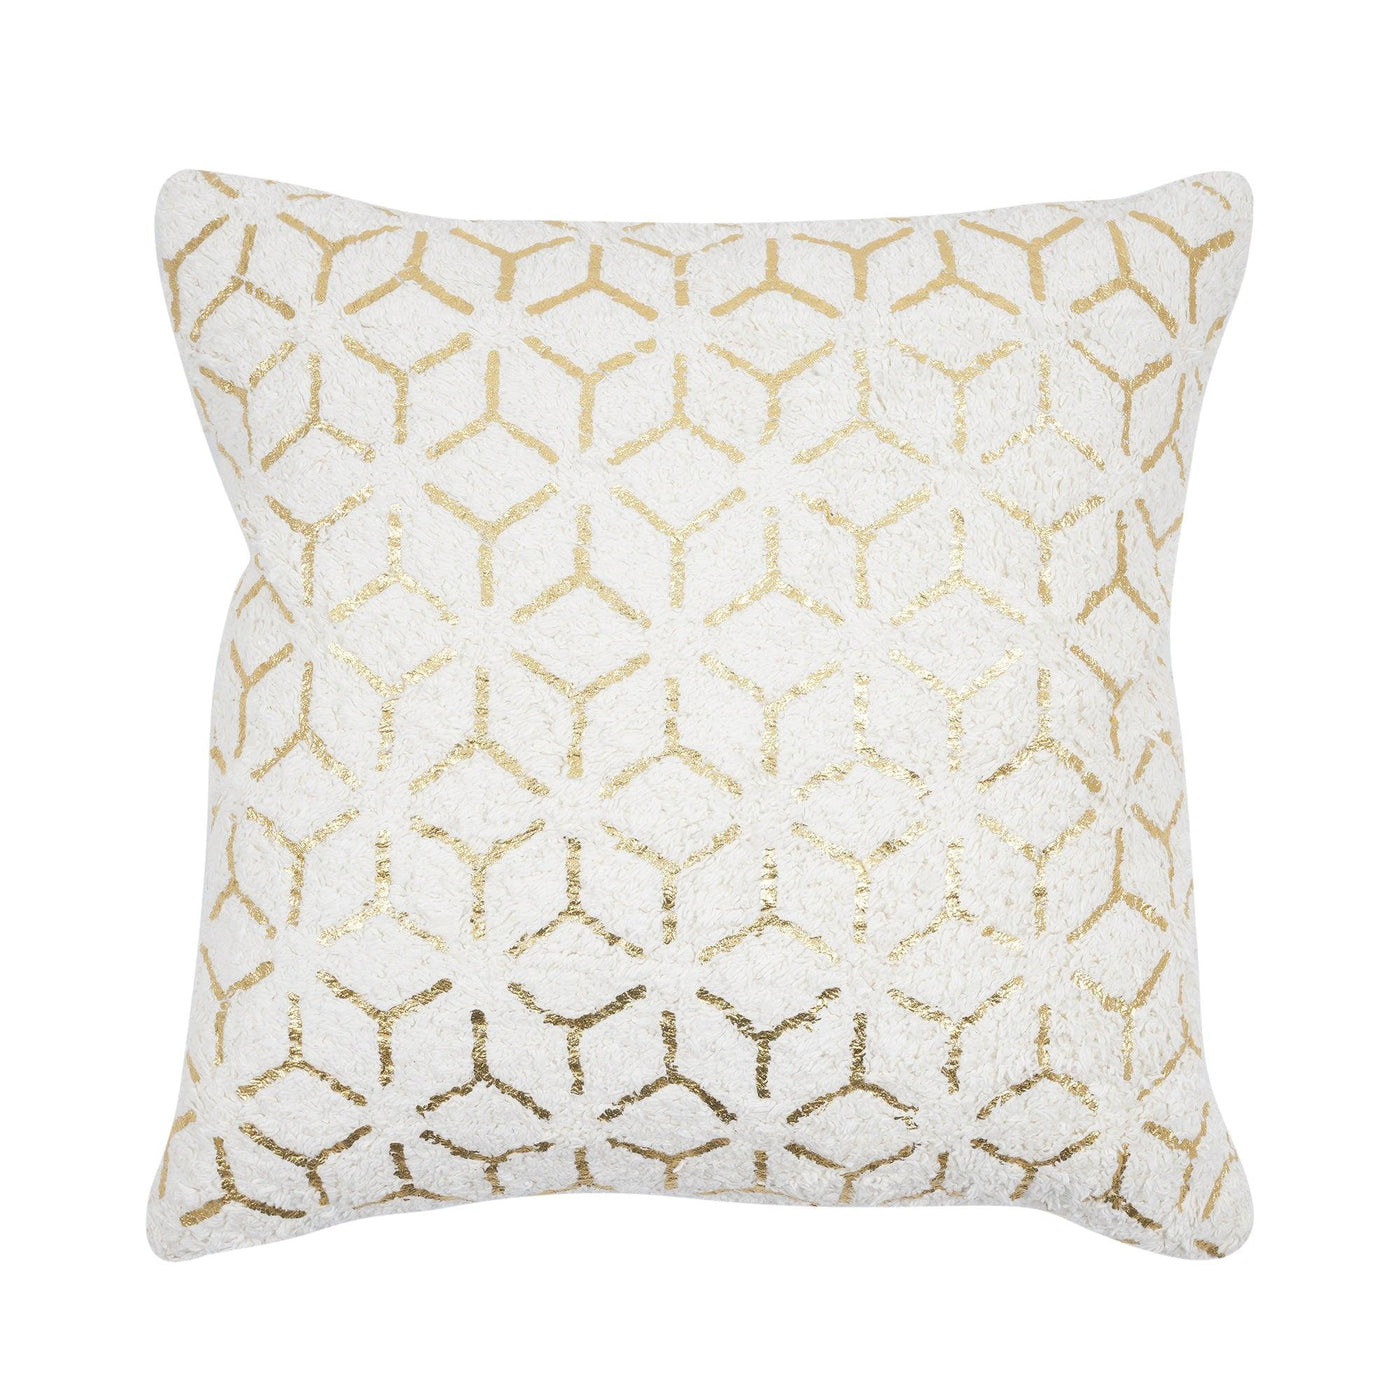 Canvello Grandcanyon Geometric Gold Foil Cotton Pillow, White